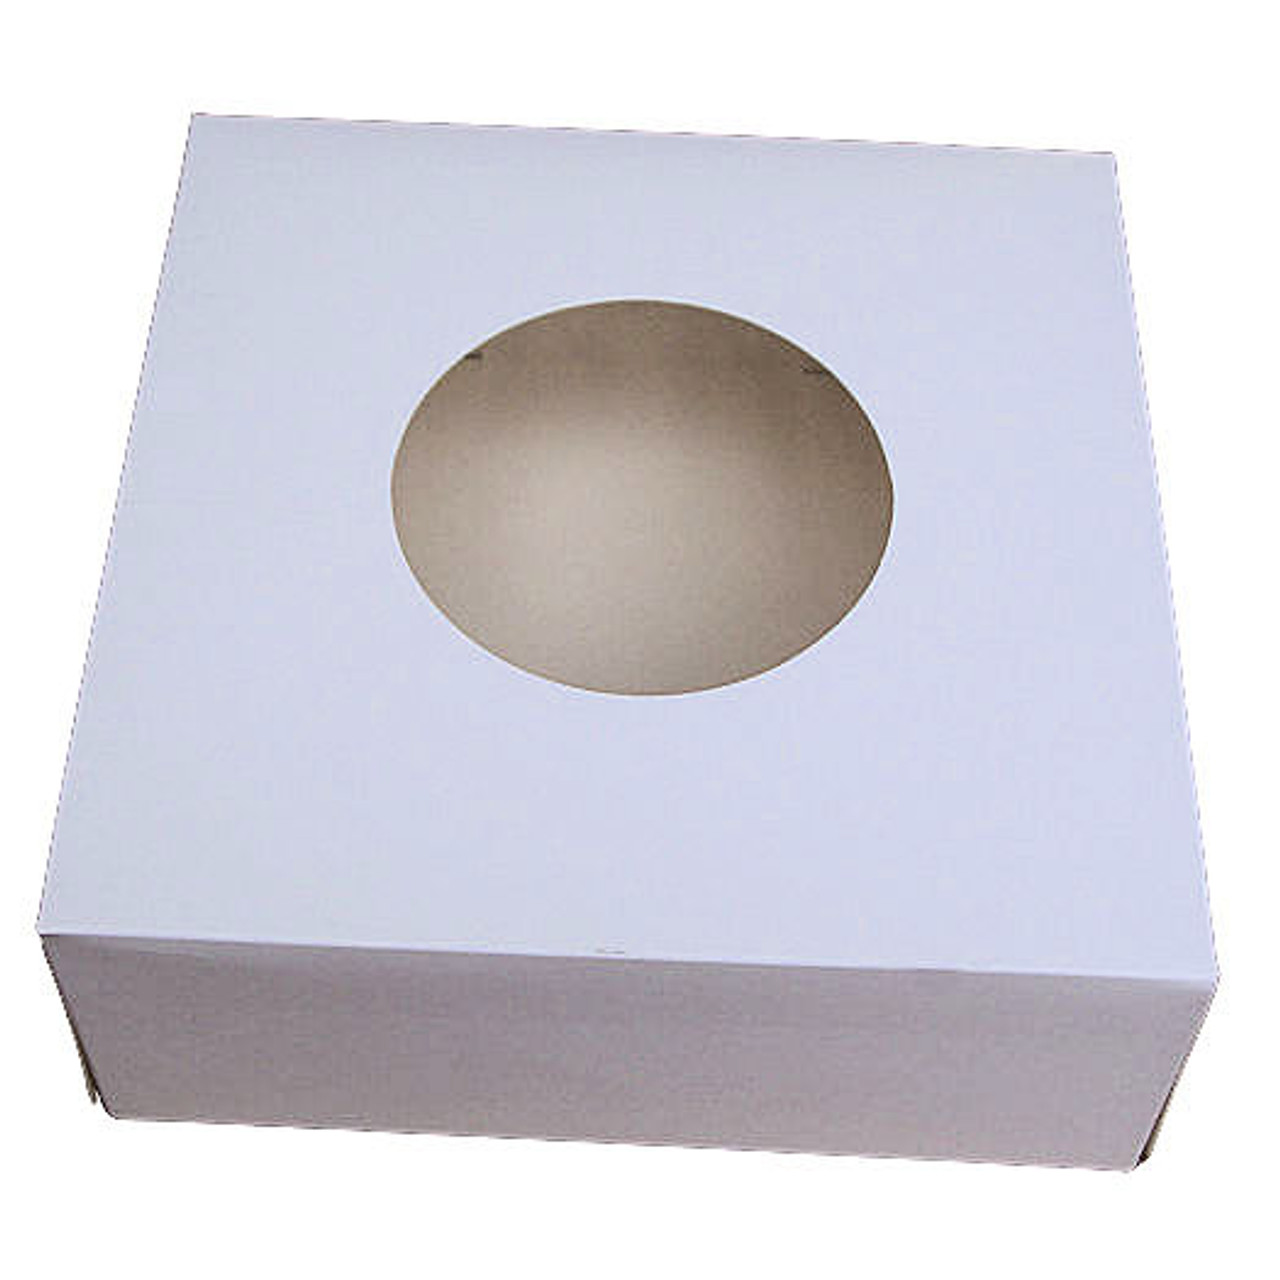 Pack x   5  Cardboard White 9 Cupcake or 20 Mini Cupcake box with window